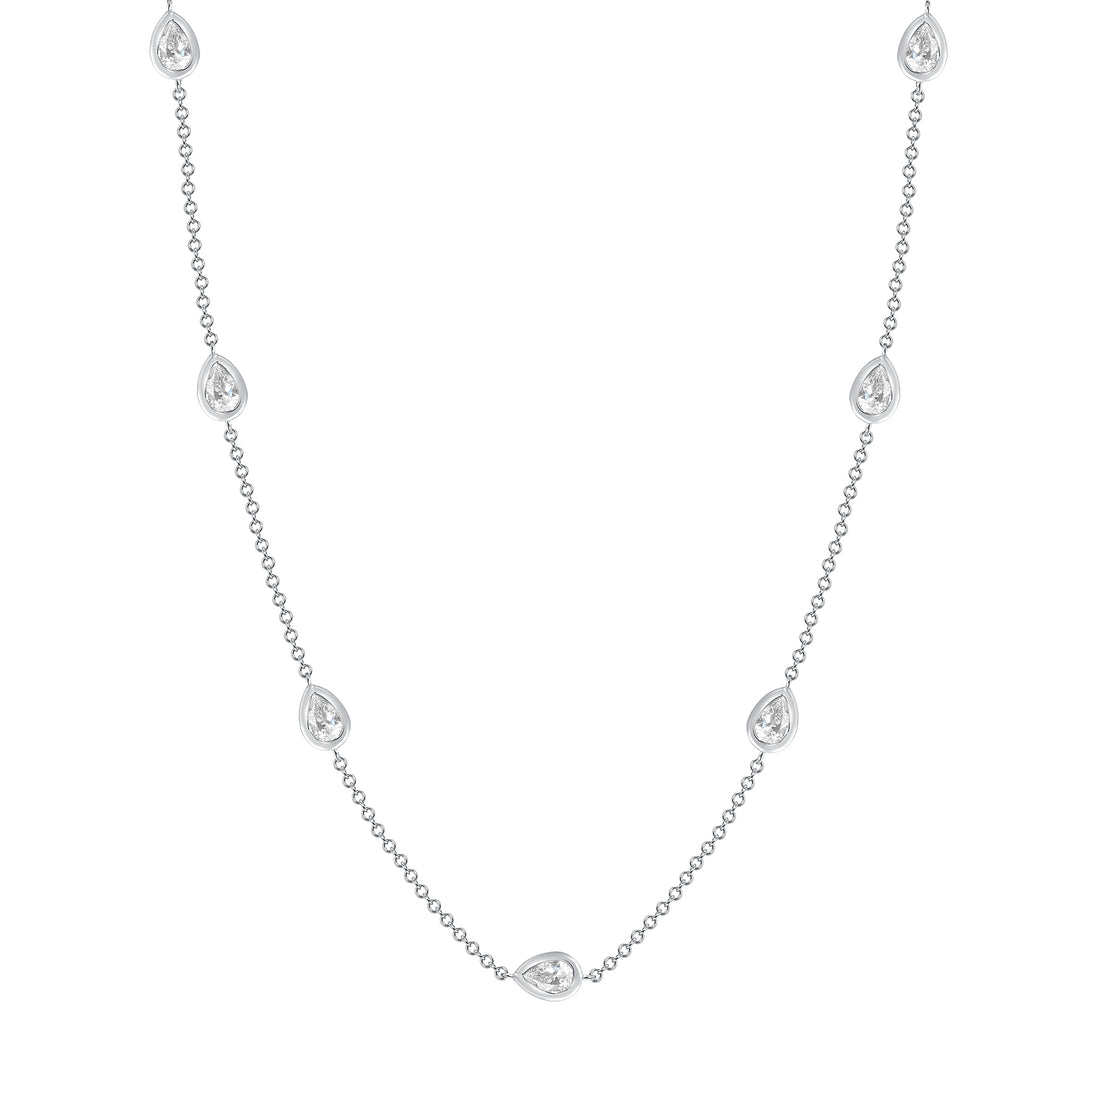 3.42 CT. Pear Cut Diamond Bezel Set Necklace in 14K White Gold.